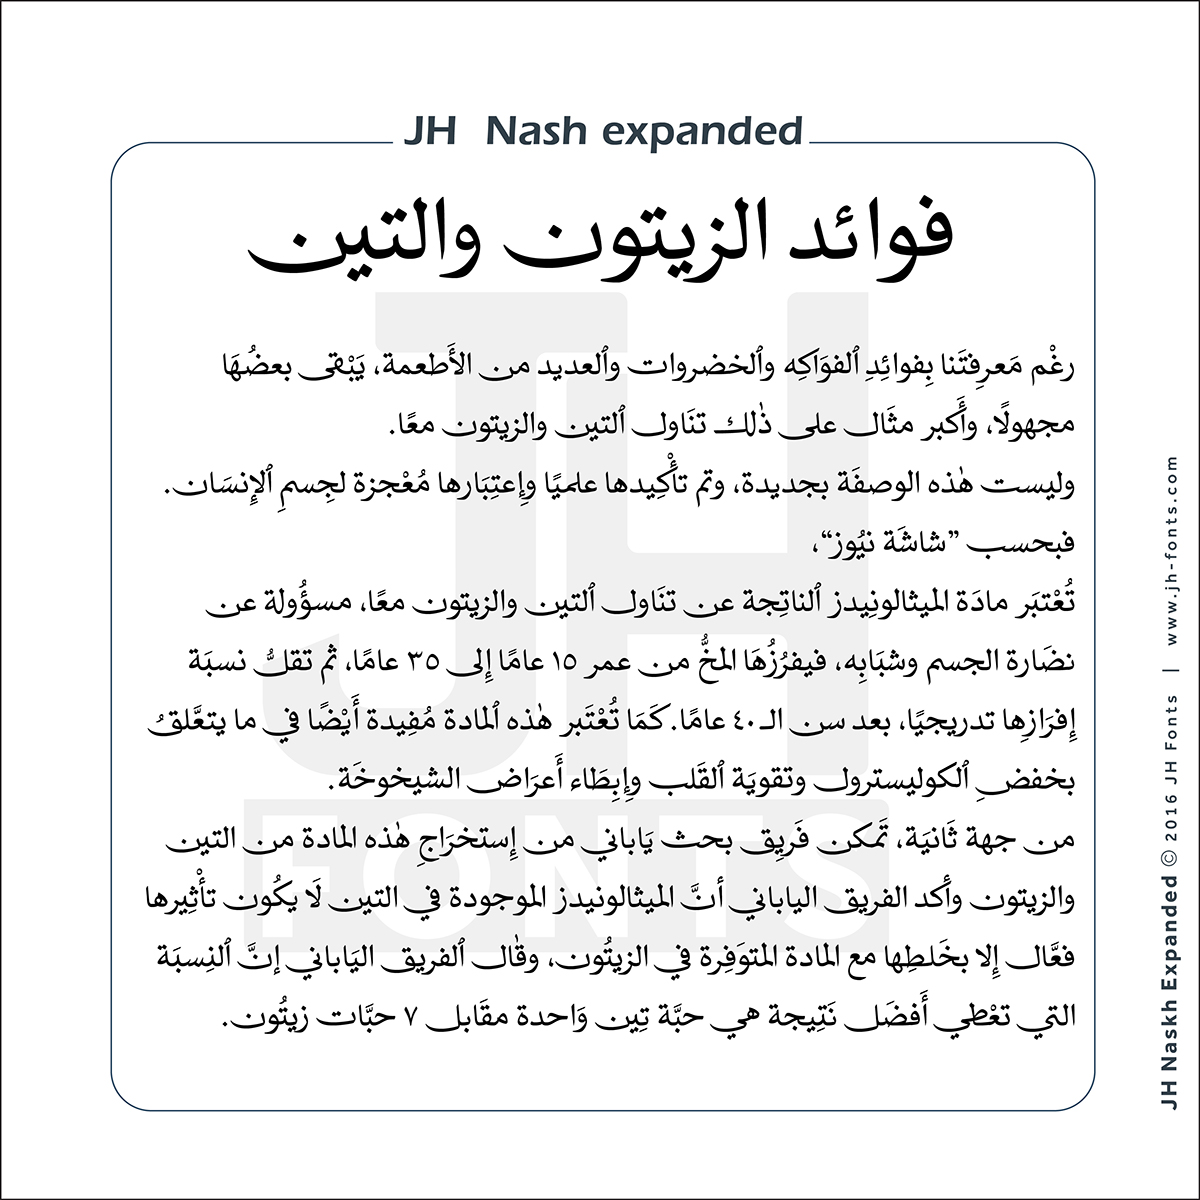 jh fonts Naskh Arabic Fonts Cursive Fonts Joe Hatem cover books dust jackets